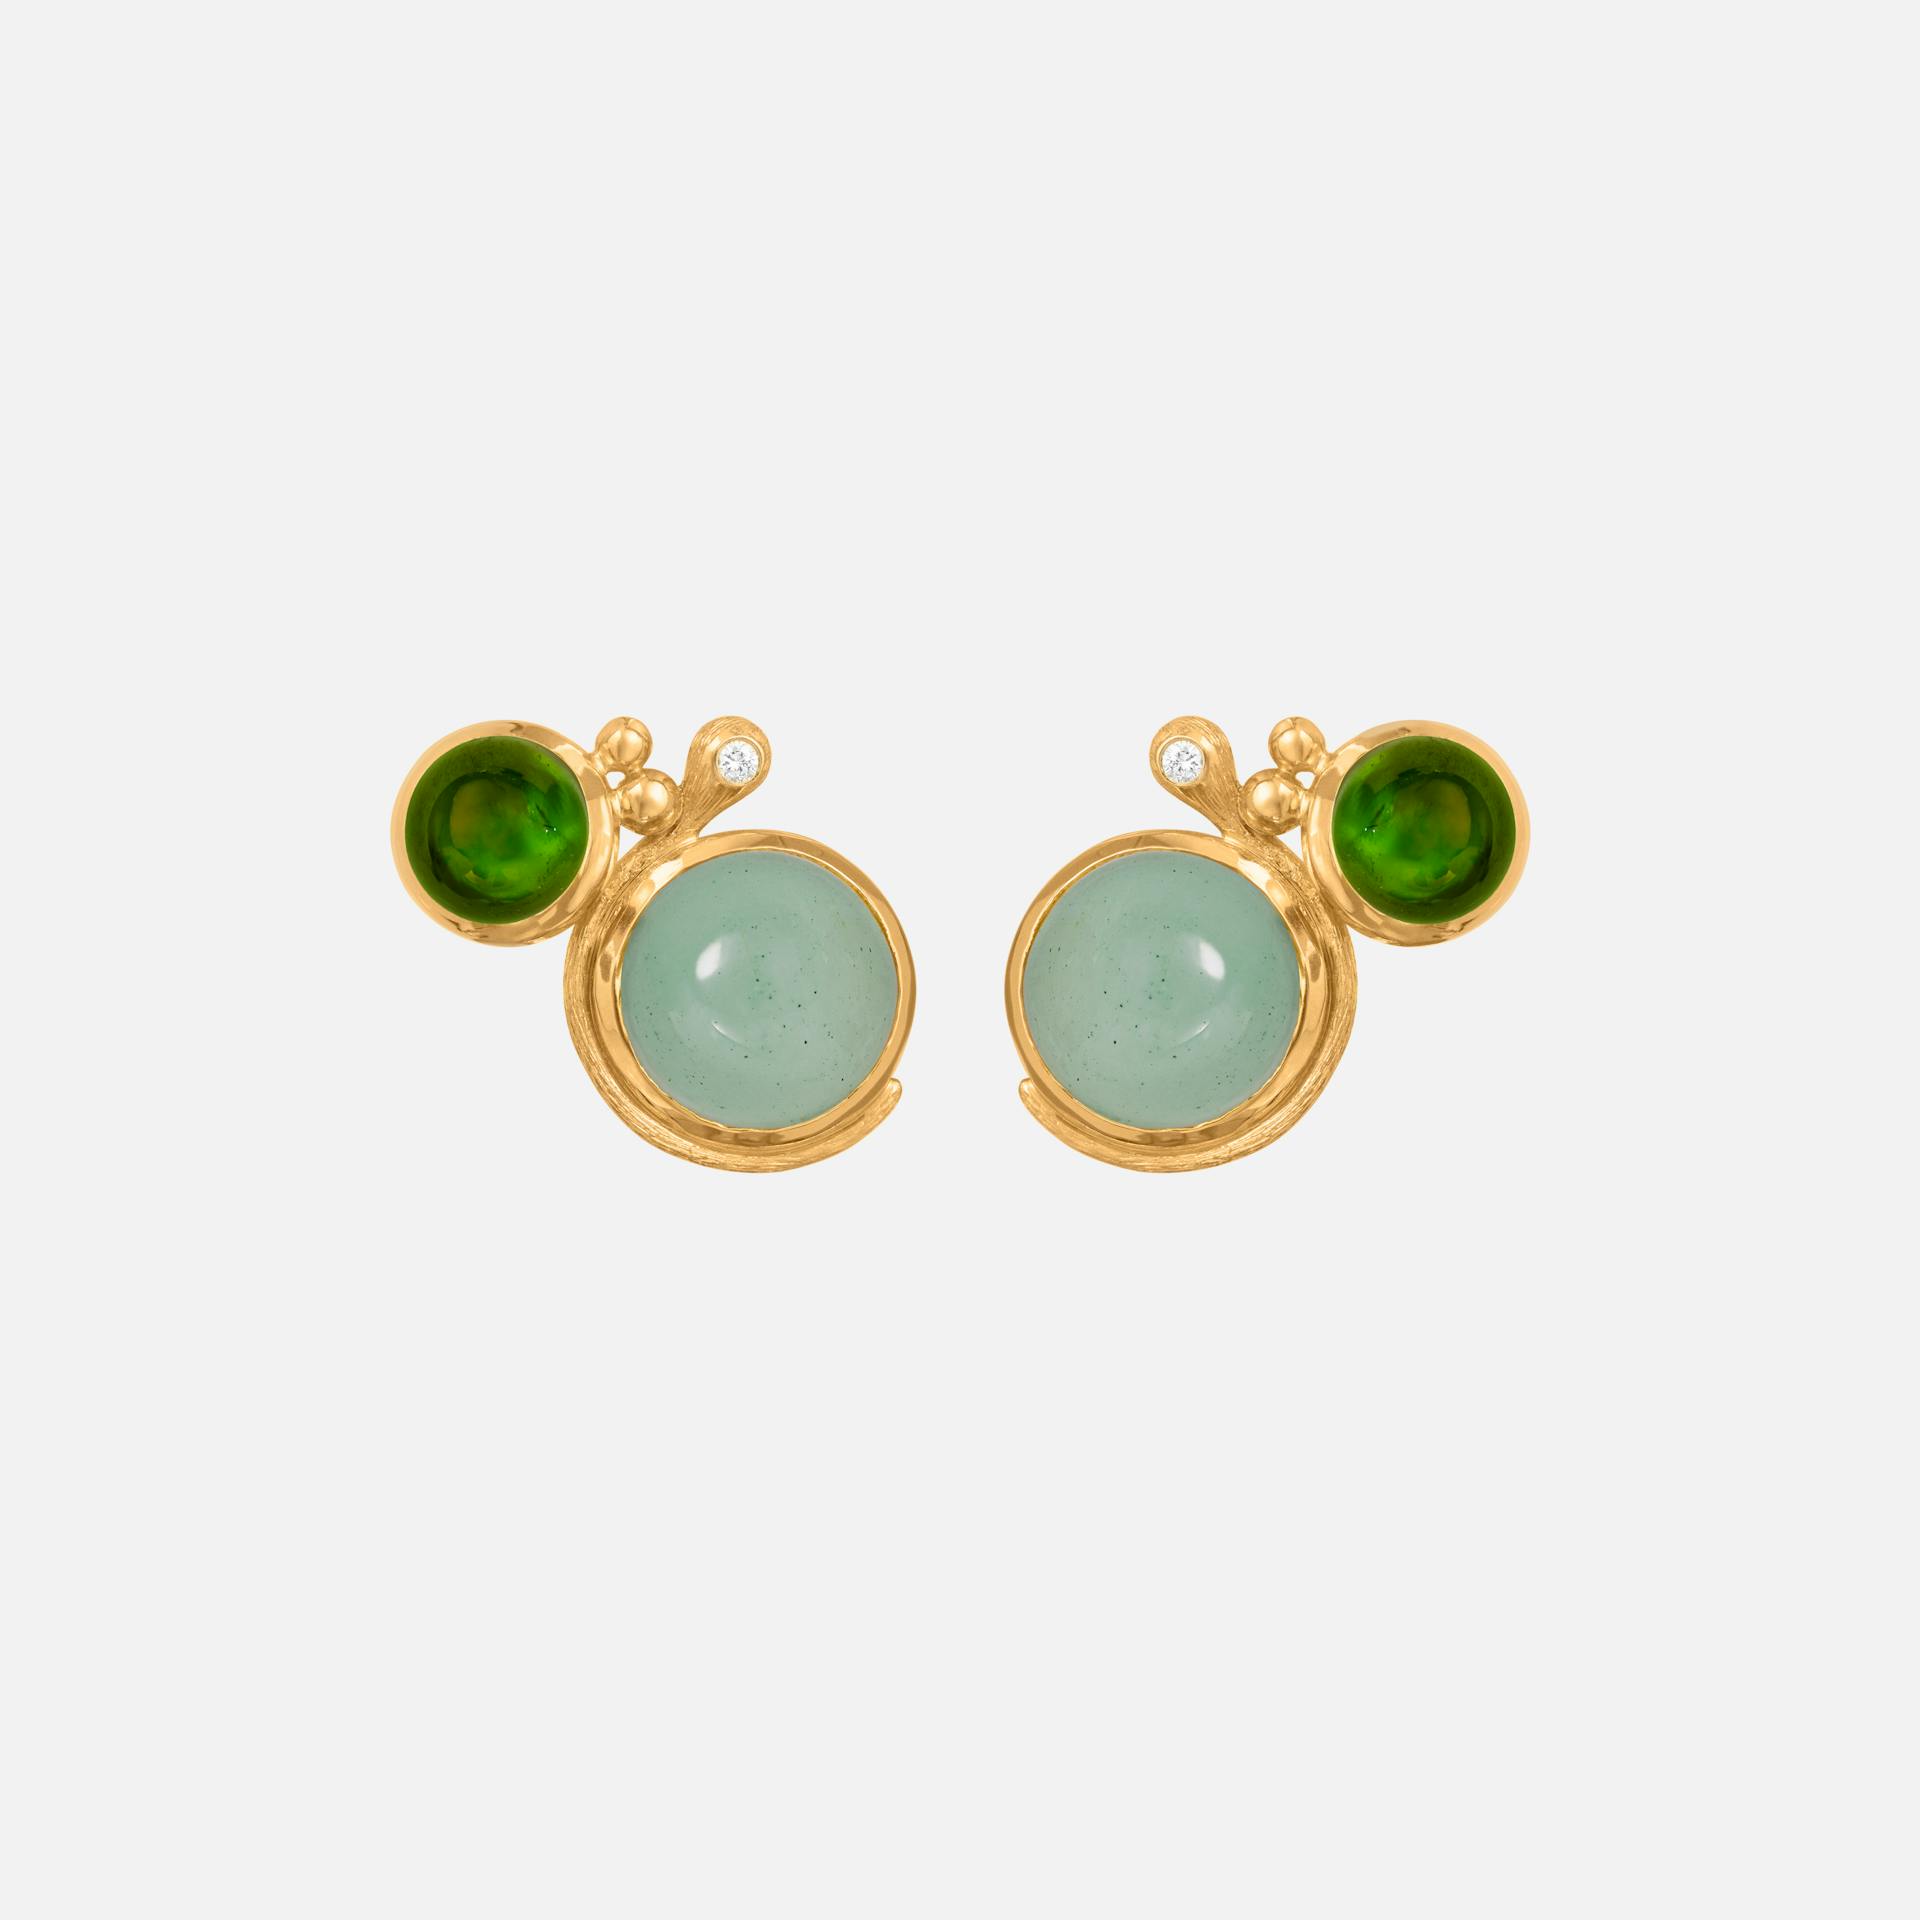 Lotus stud earrings 18k gold with green tourmaline and aquamarine